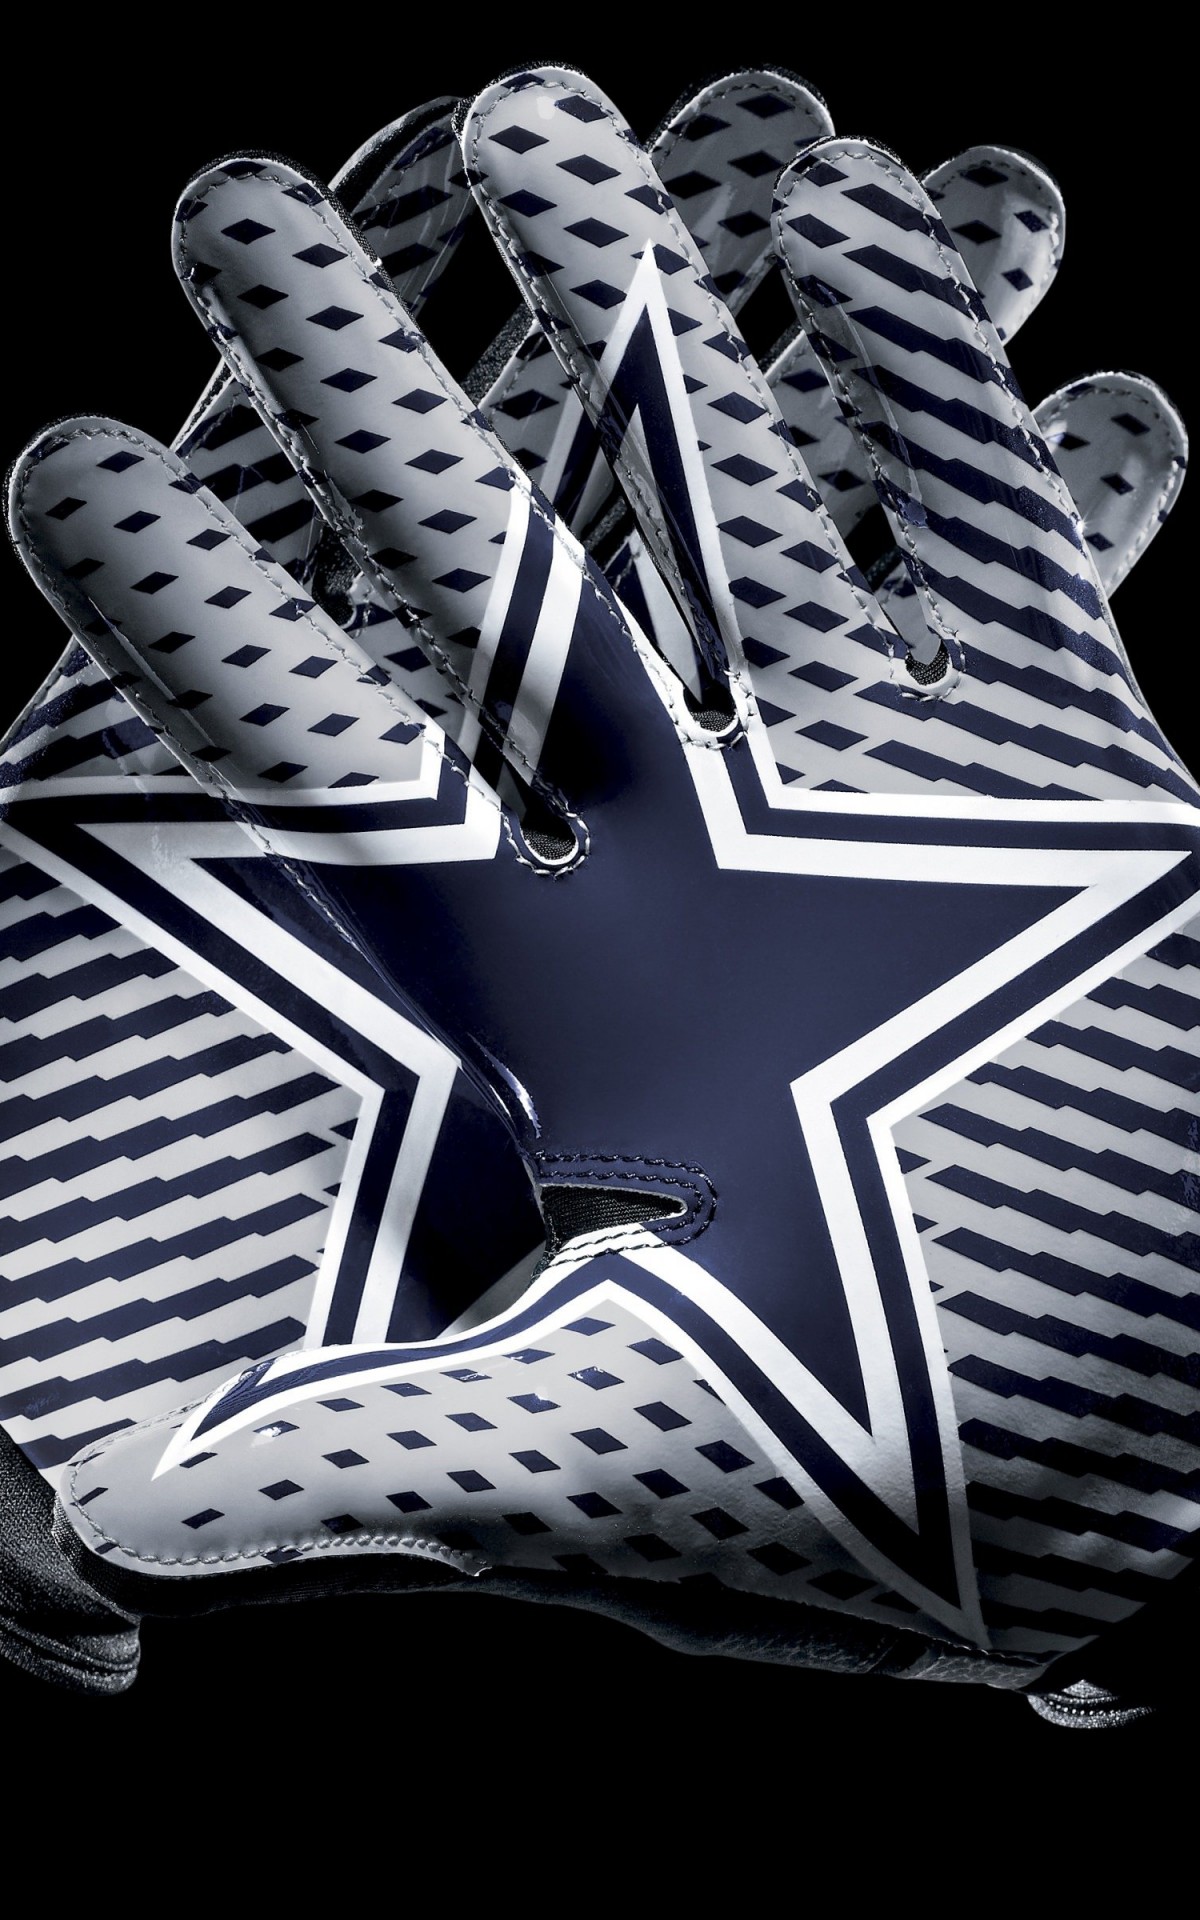 Dallas Cowboys Gloves Wallpaper for Amazon Kindle Fire HDX